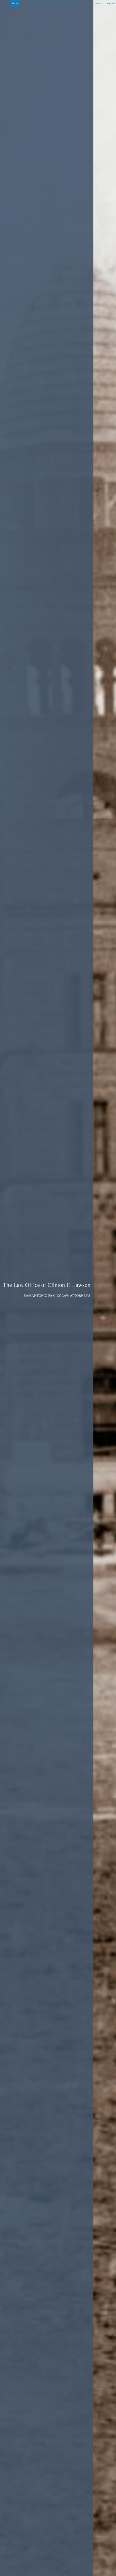 The Law Office of Clinton F. Lawson - San Antonio TX Lawyers